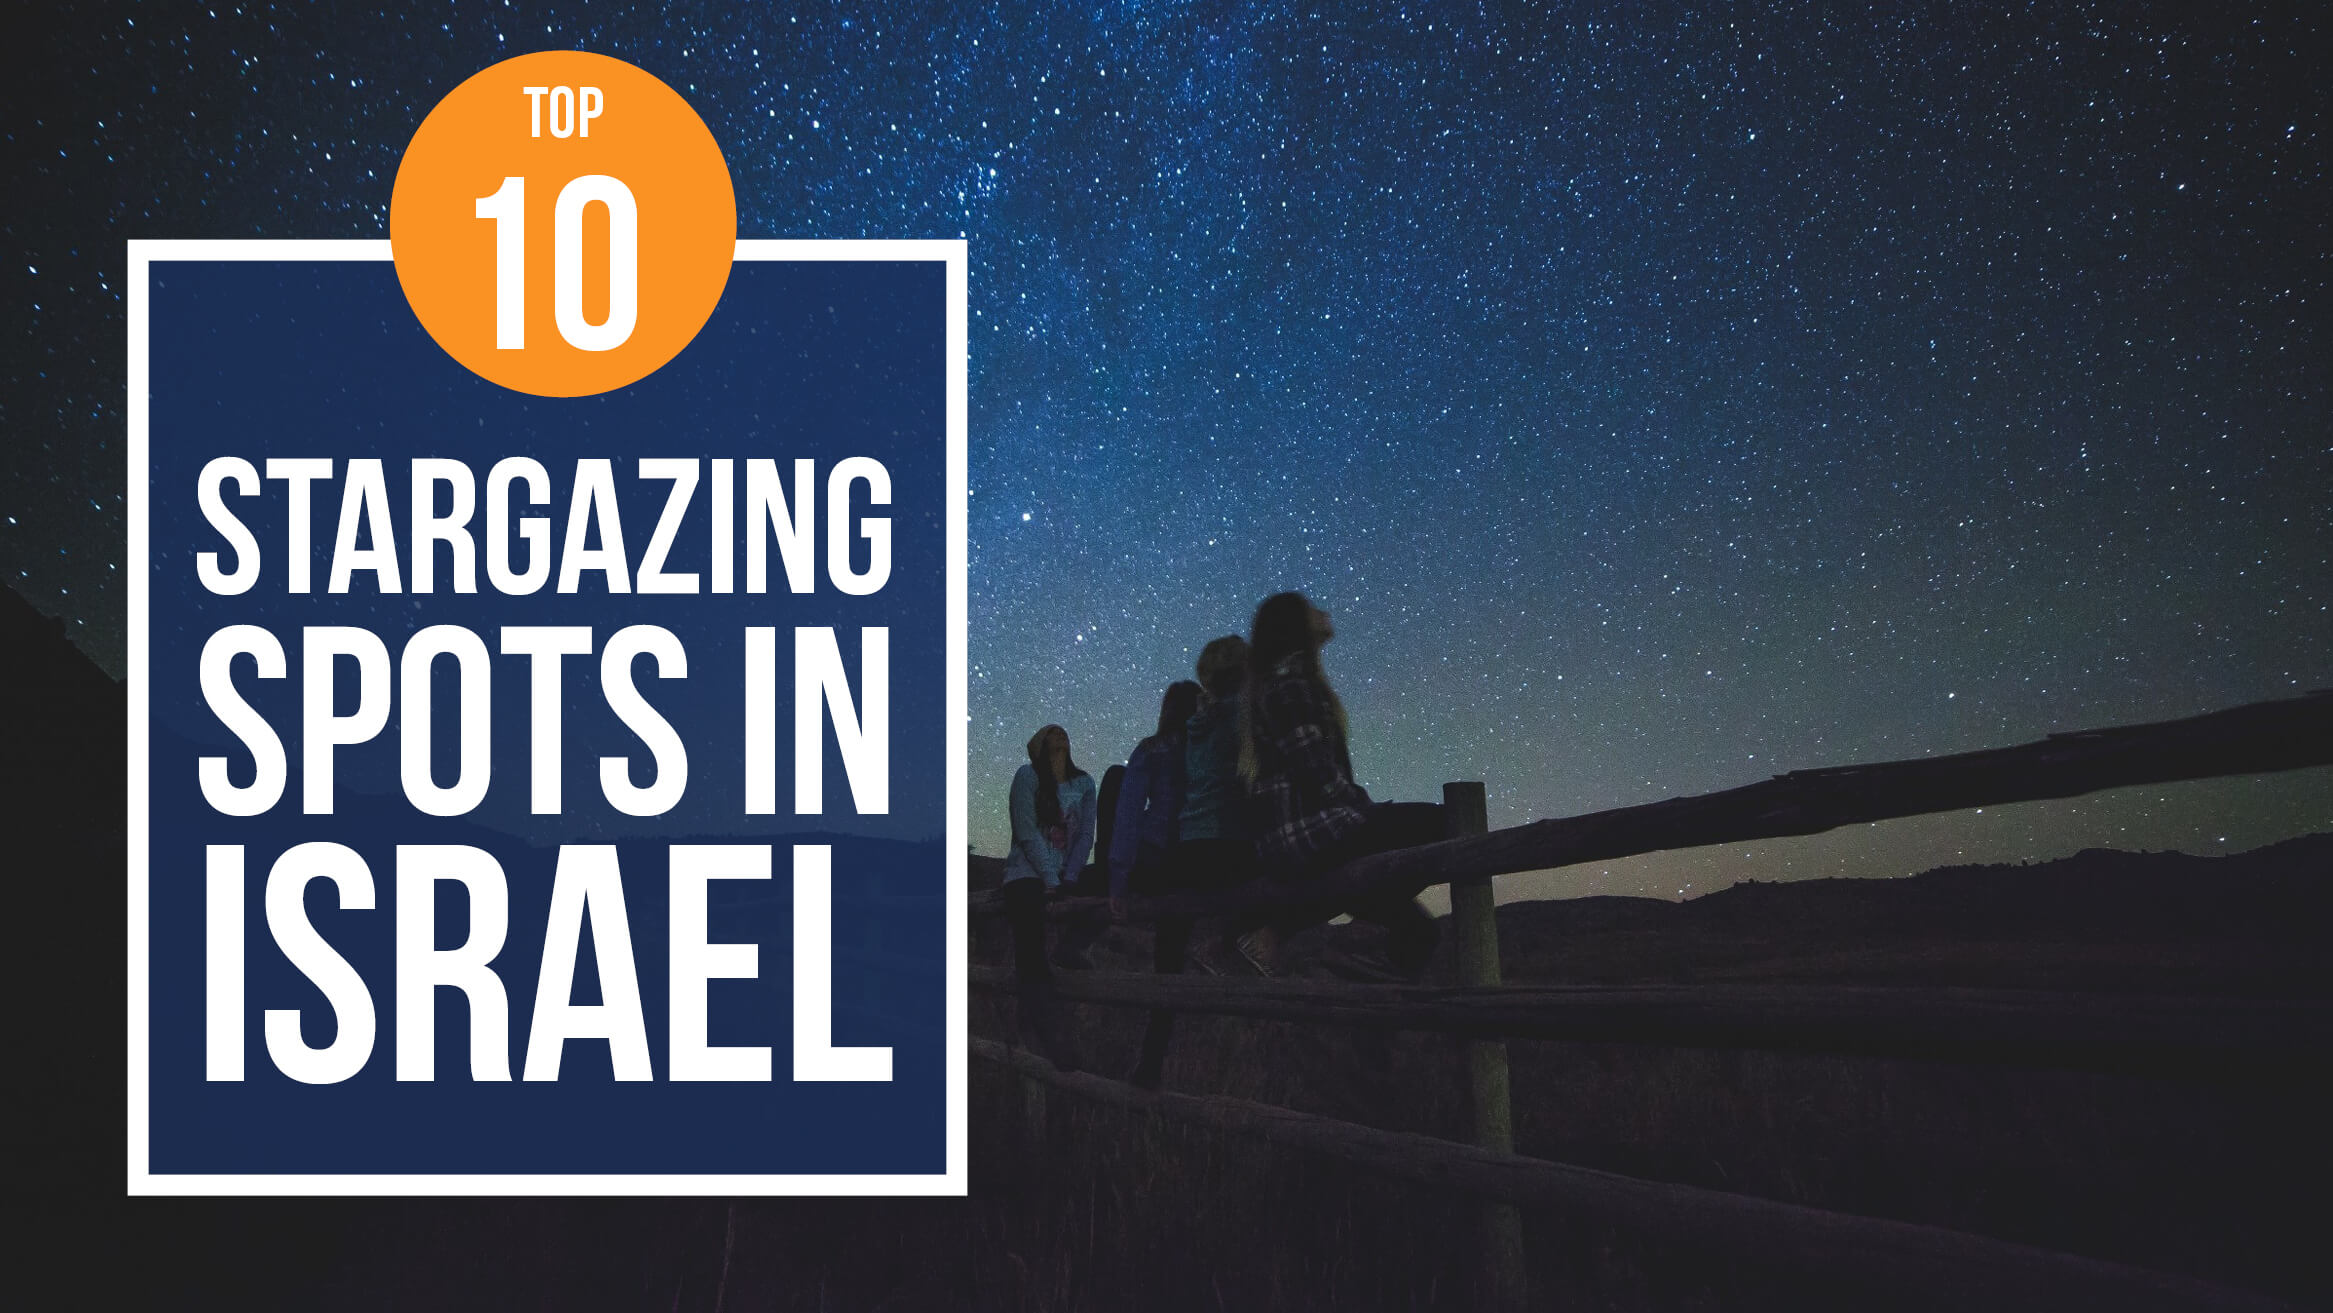 Top 10 Stargazing Spots in Israel header